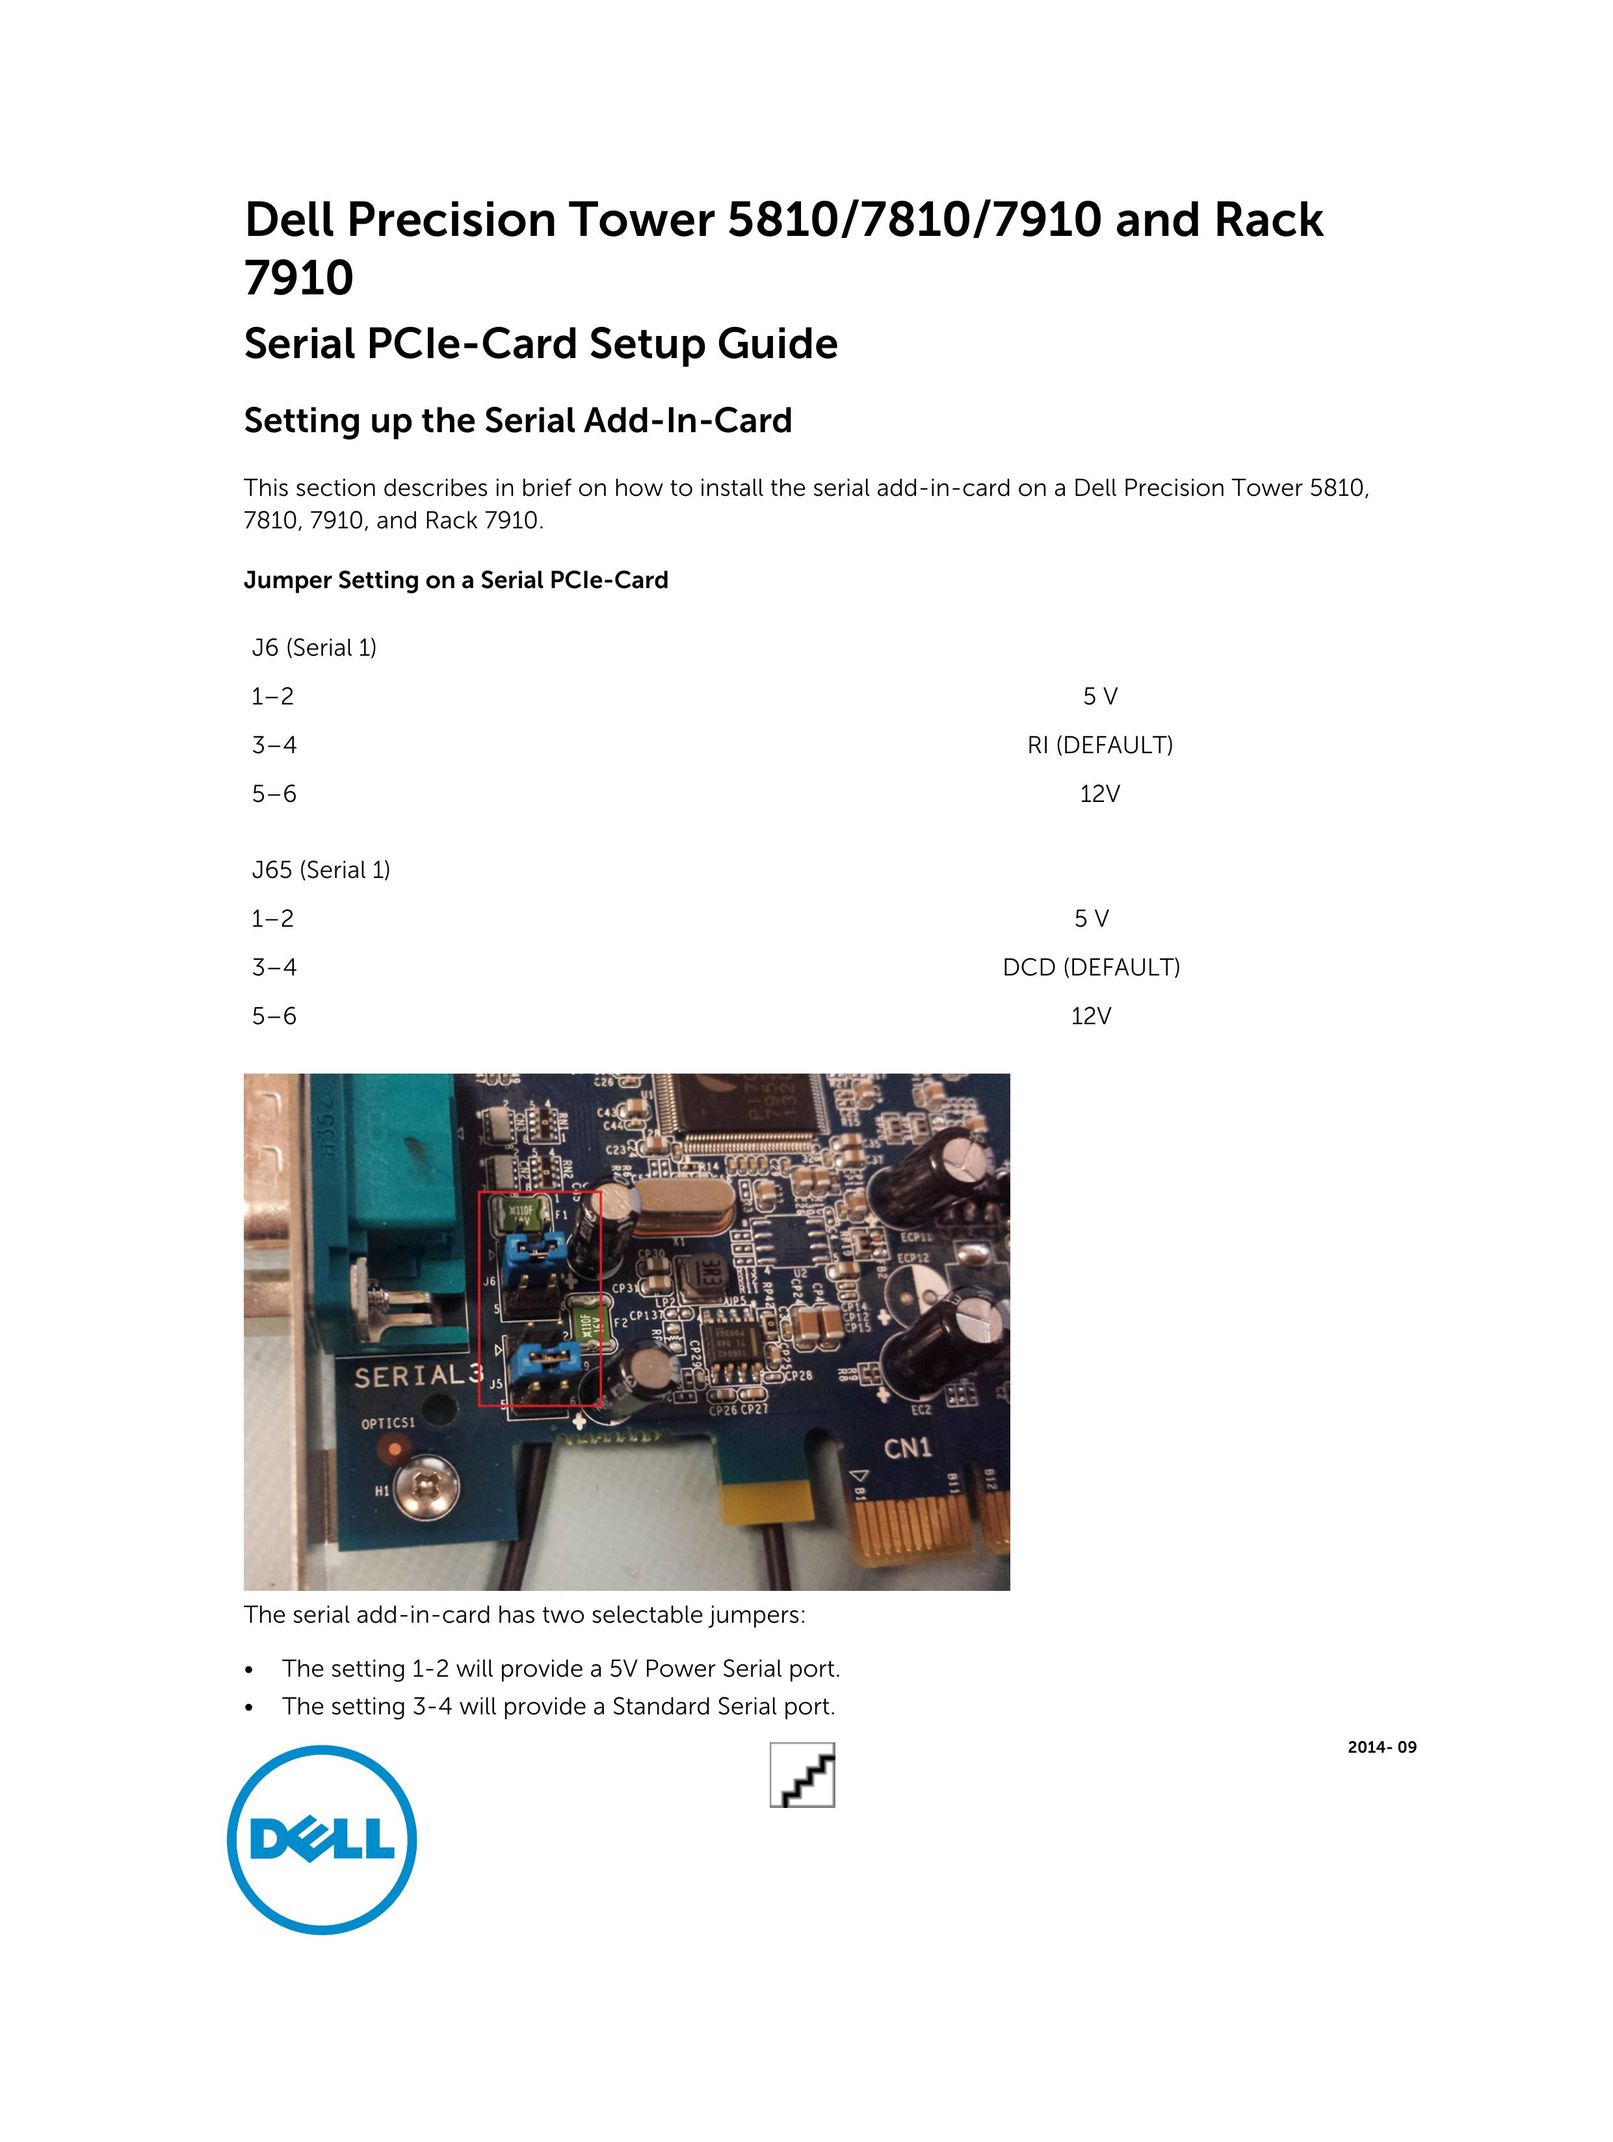 Dell 7810 Computer Hardware User Manual